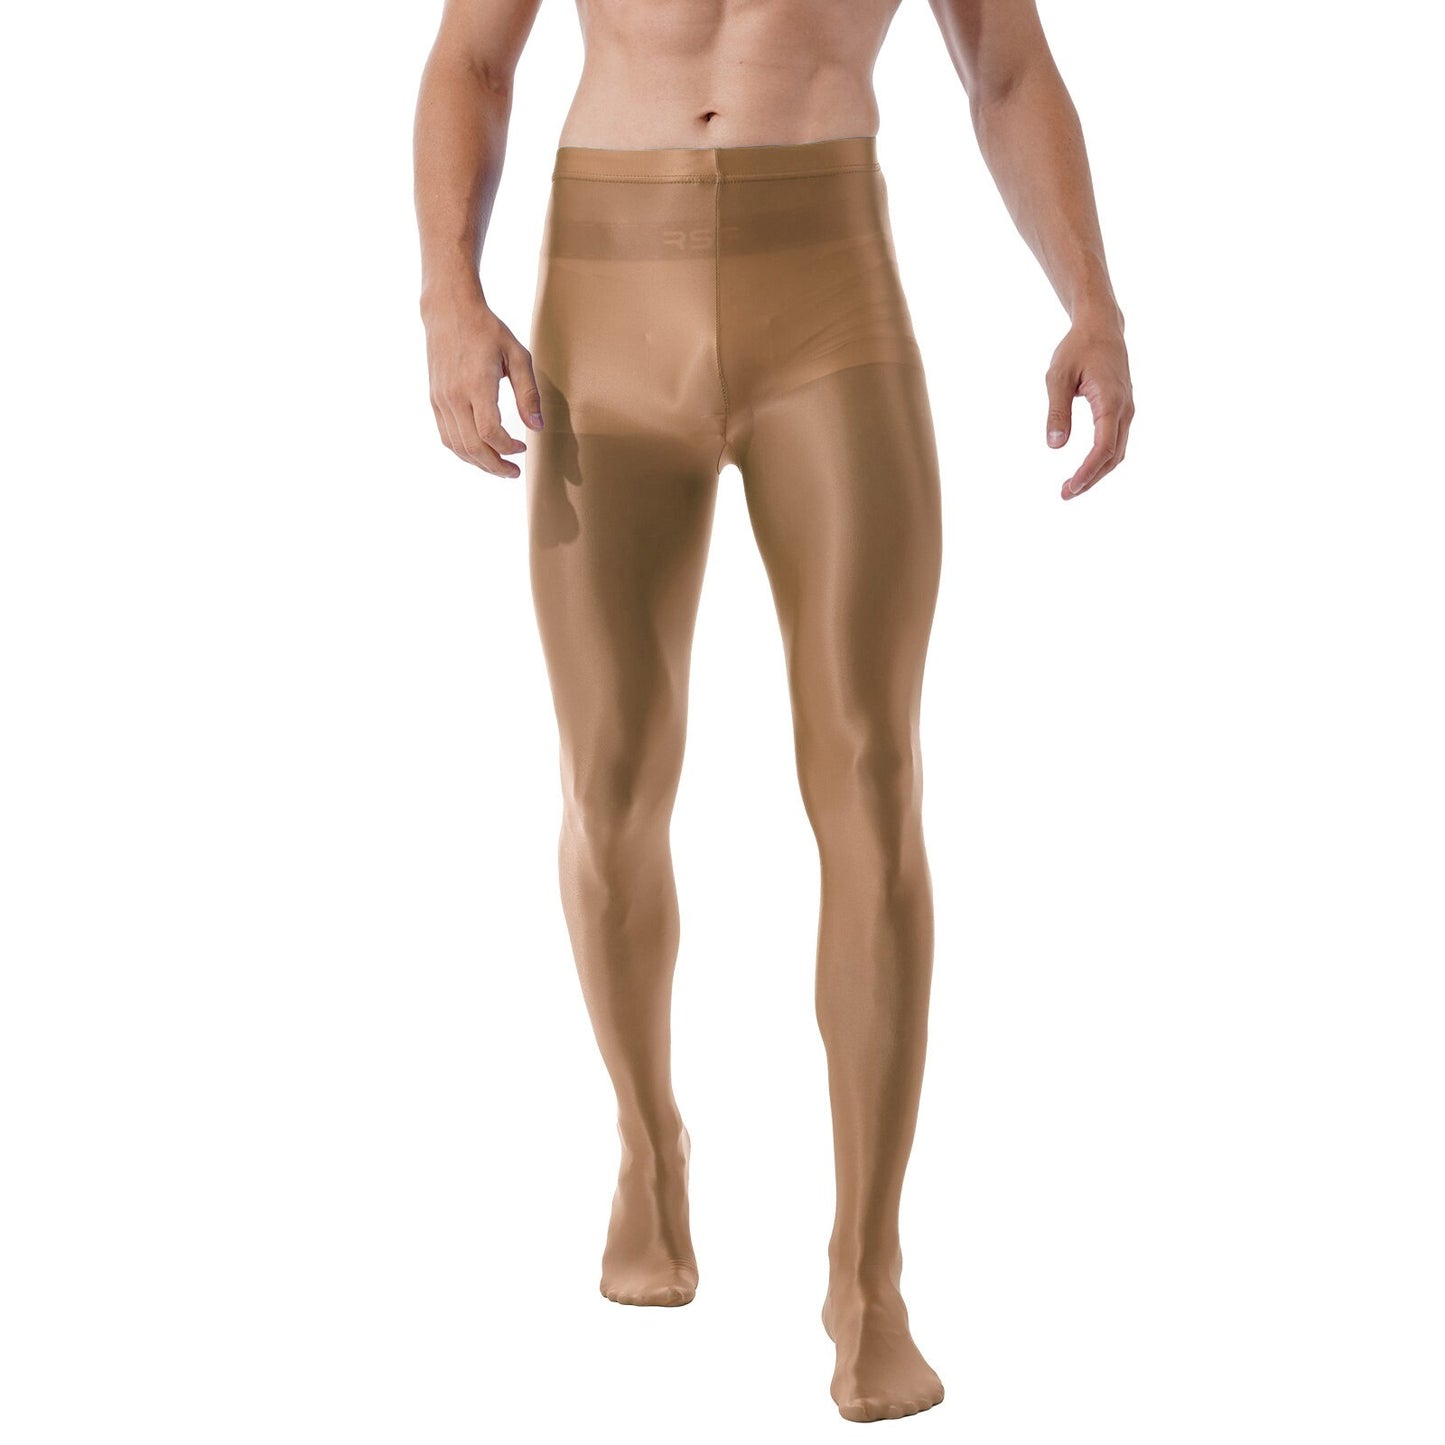 Men Fashion Glossy Pantyhose Ballet Dance Yoga Leggings Pants Training Fitness Workout Sports Trousers Tights